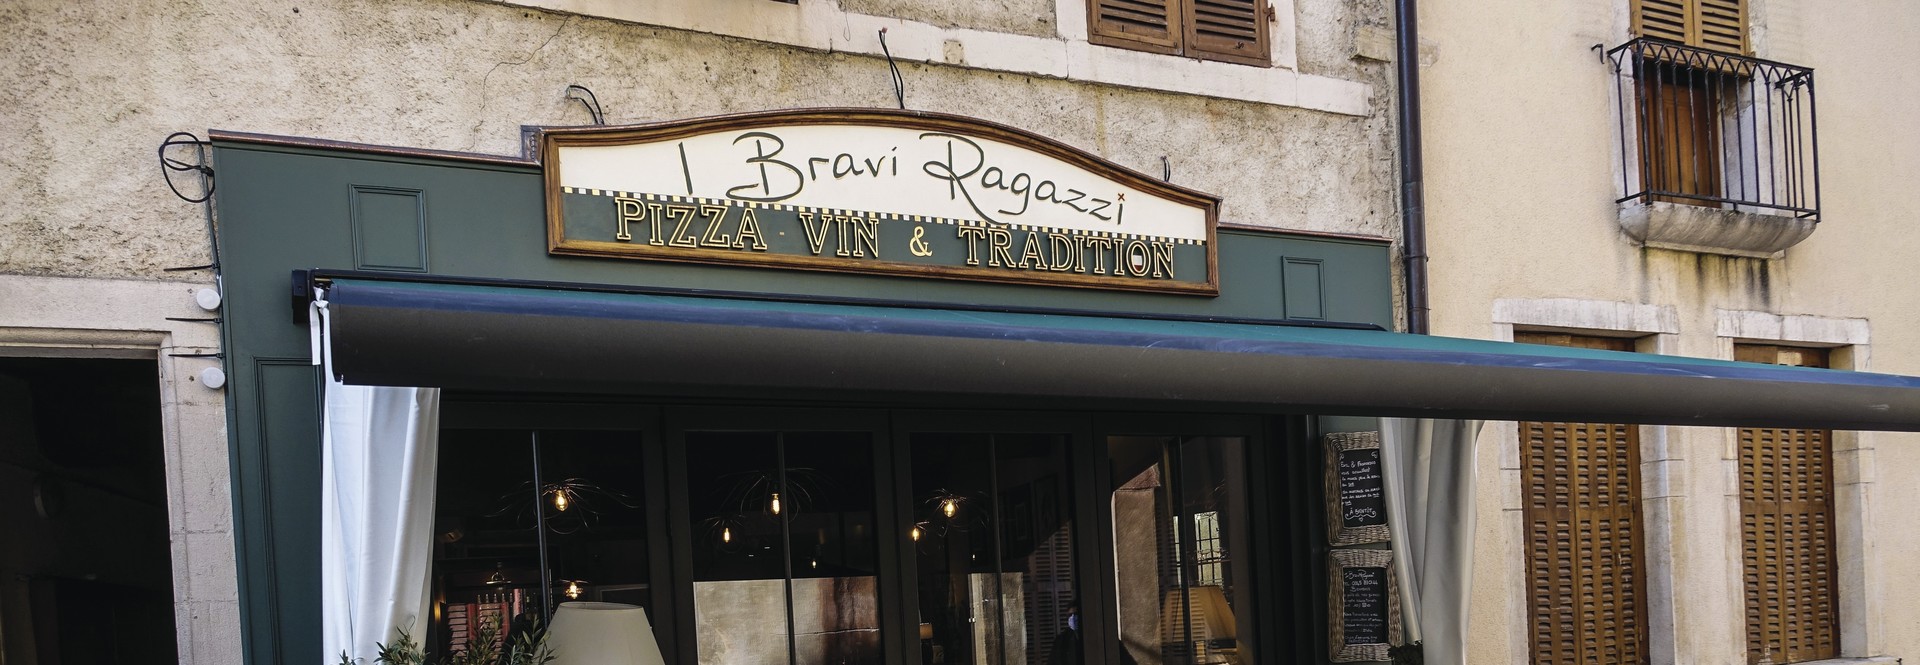 Boutique Pizzeria I BRAVI RAGAZZI - Beaune